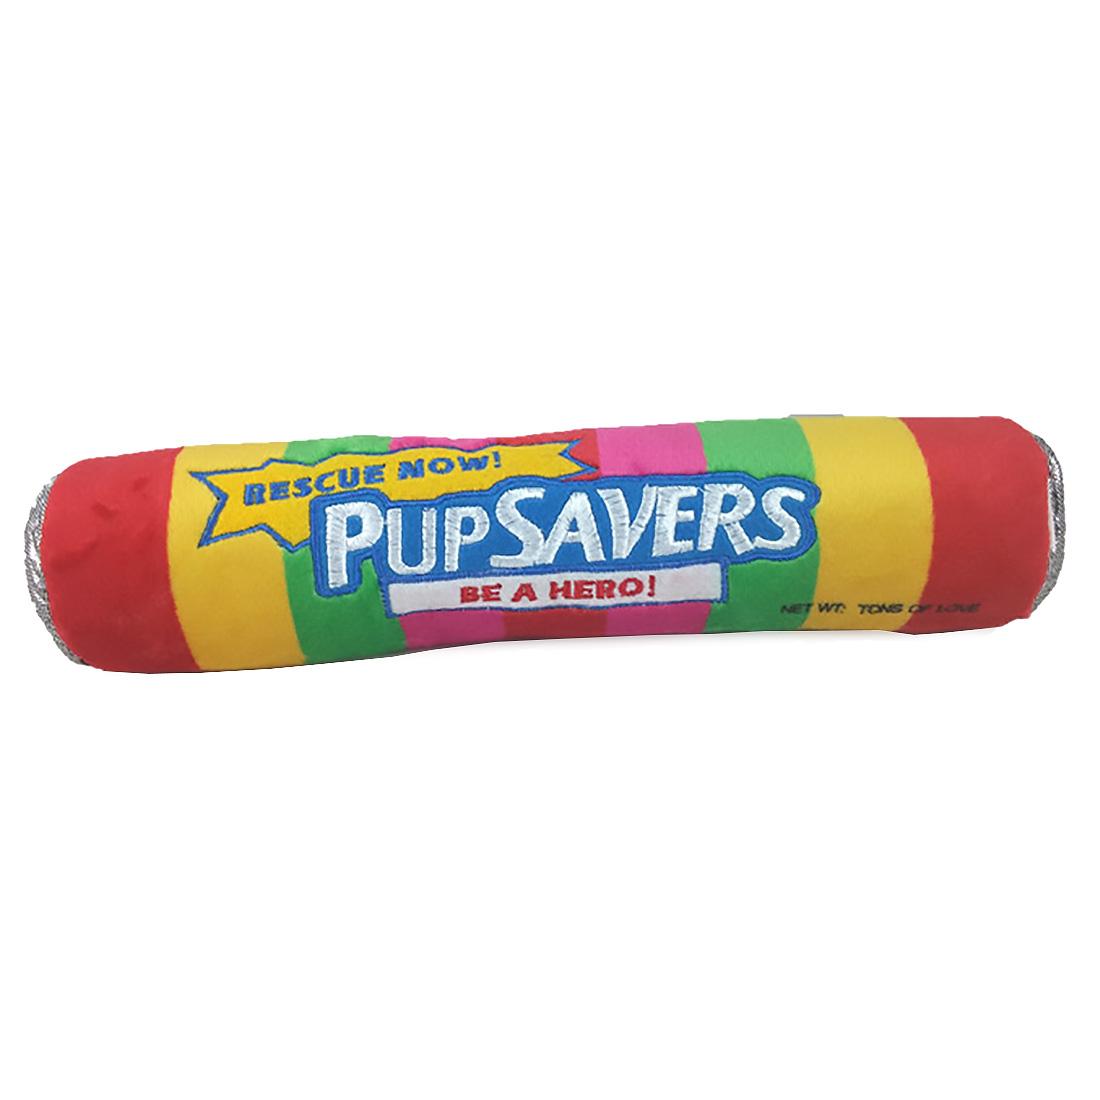 Pupsavers Candy Dog Toy